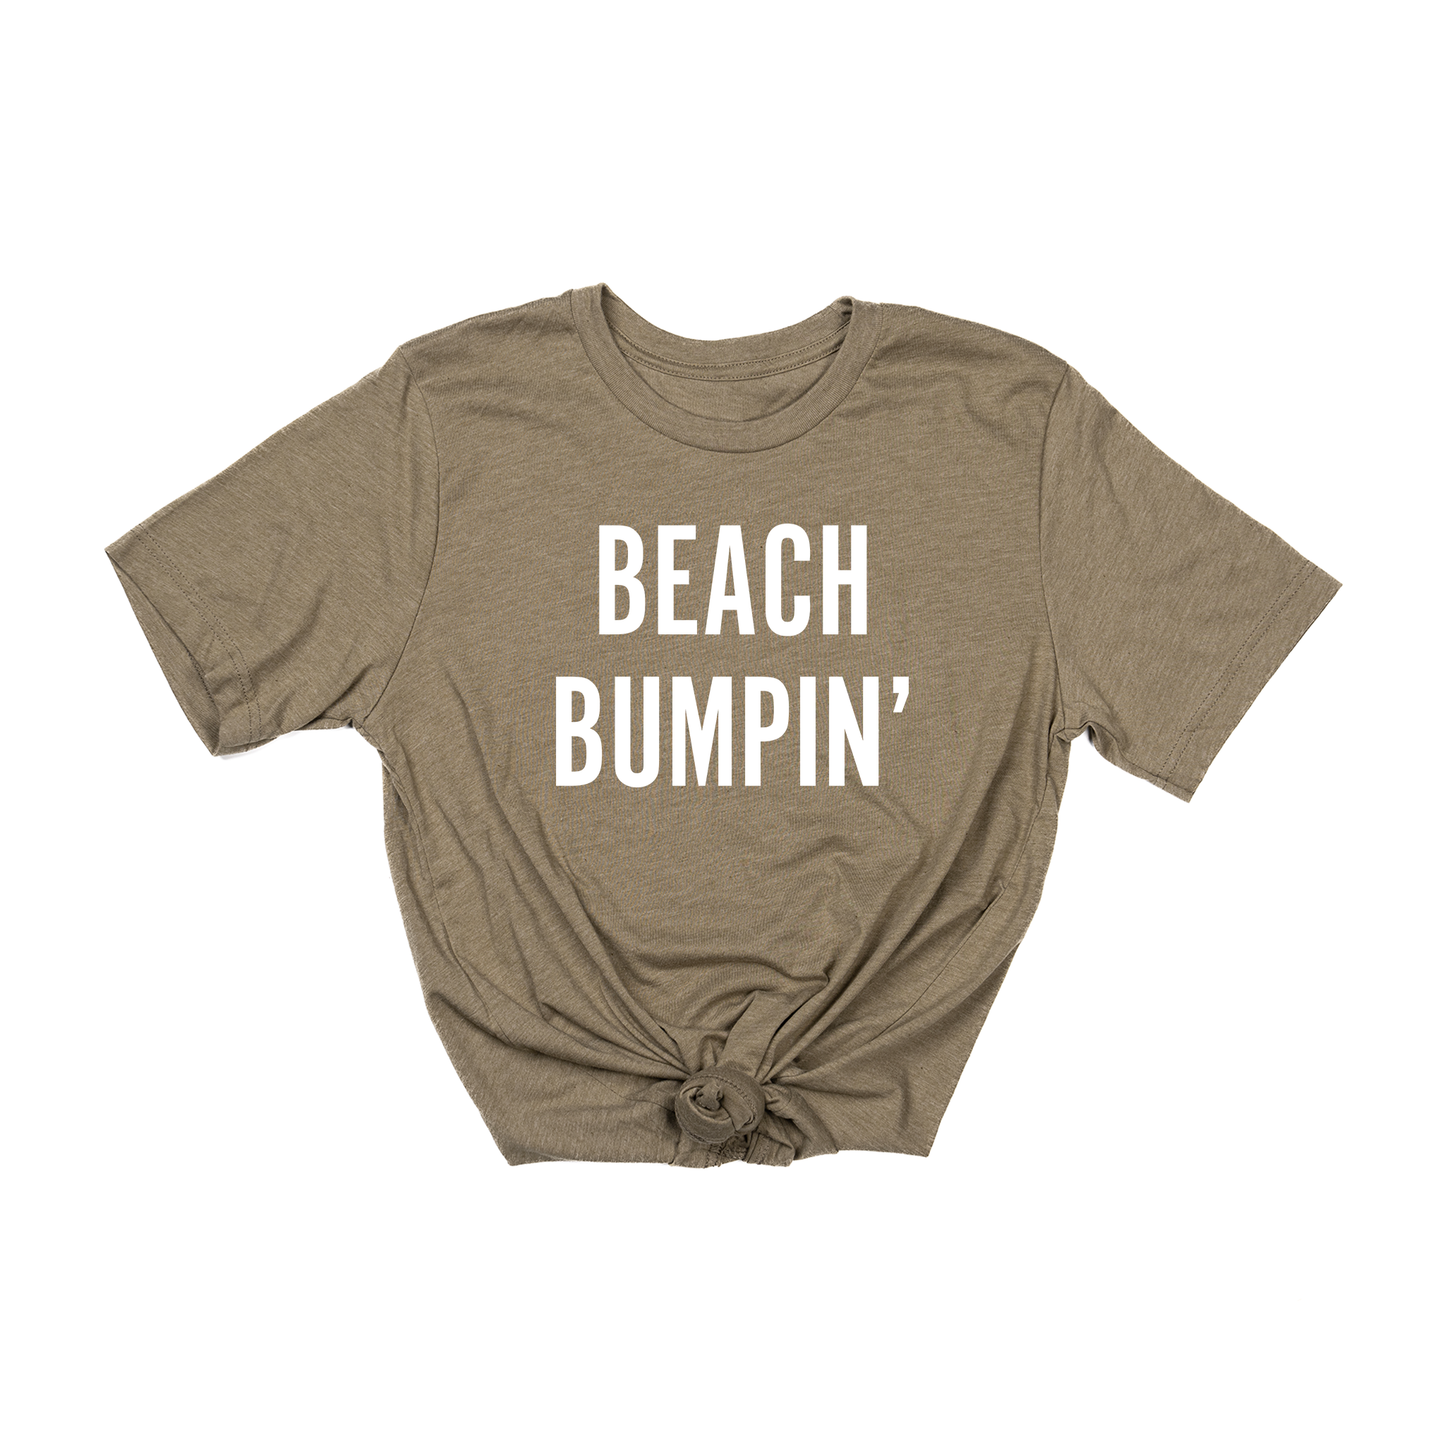 Beach Bumpin' (White) - Tee (Olive)